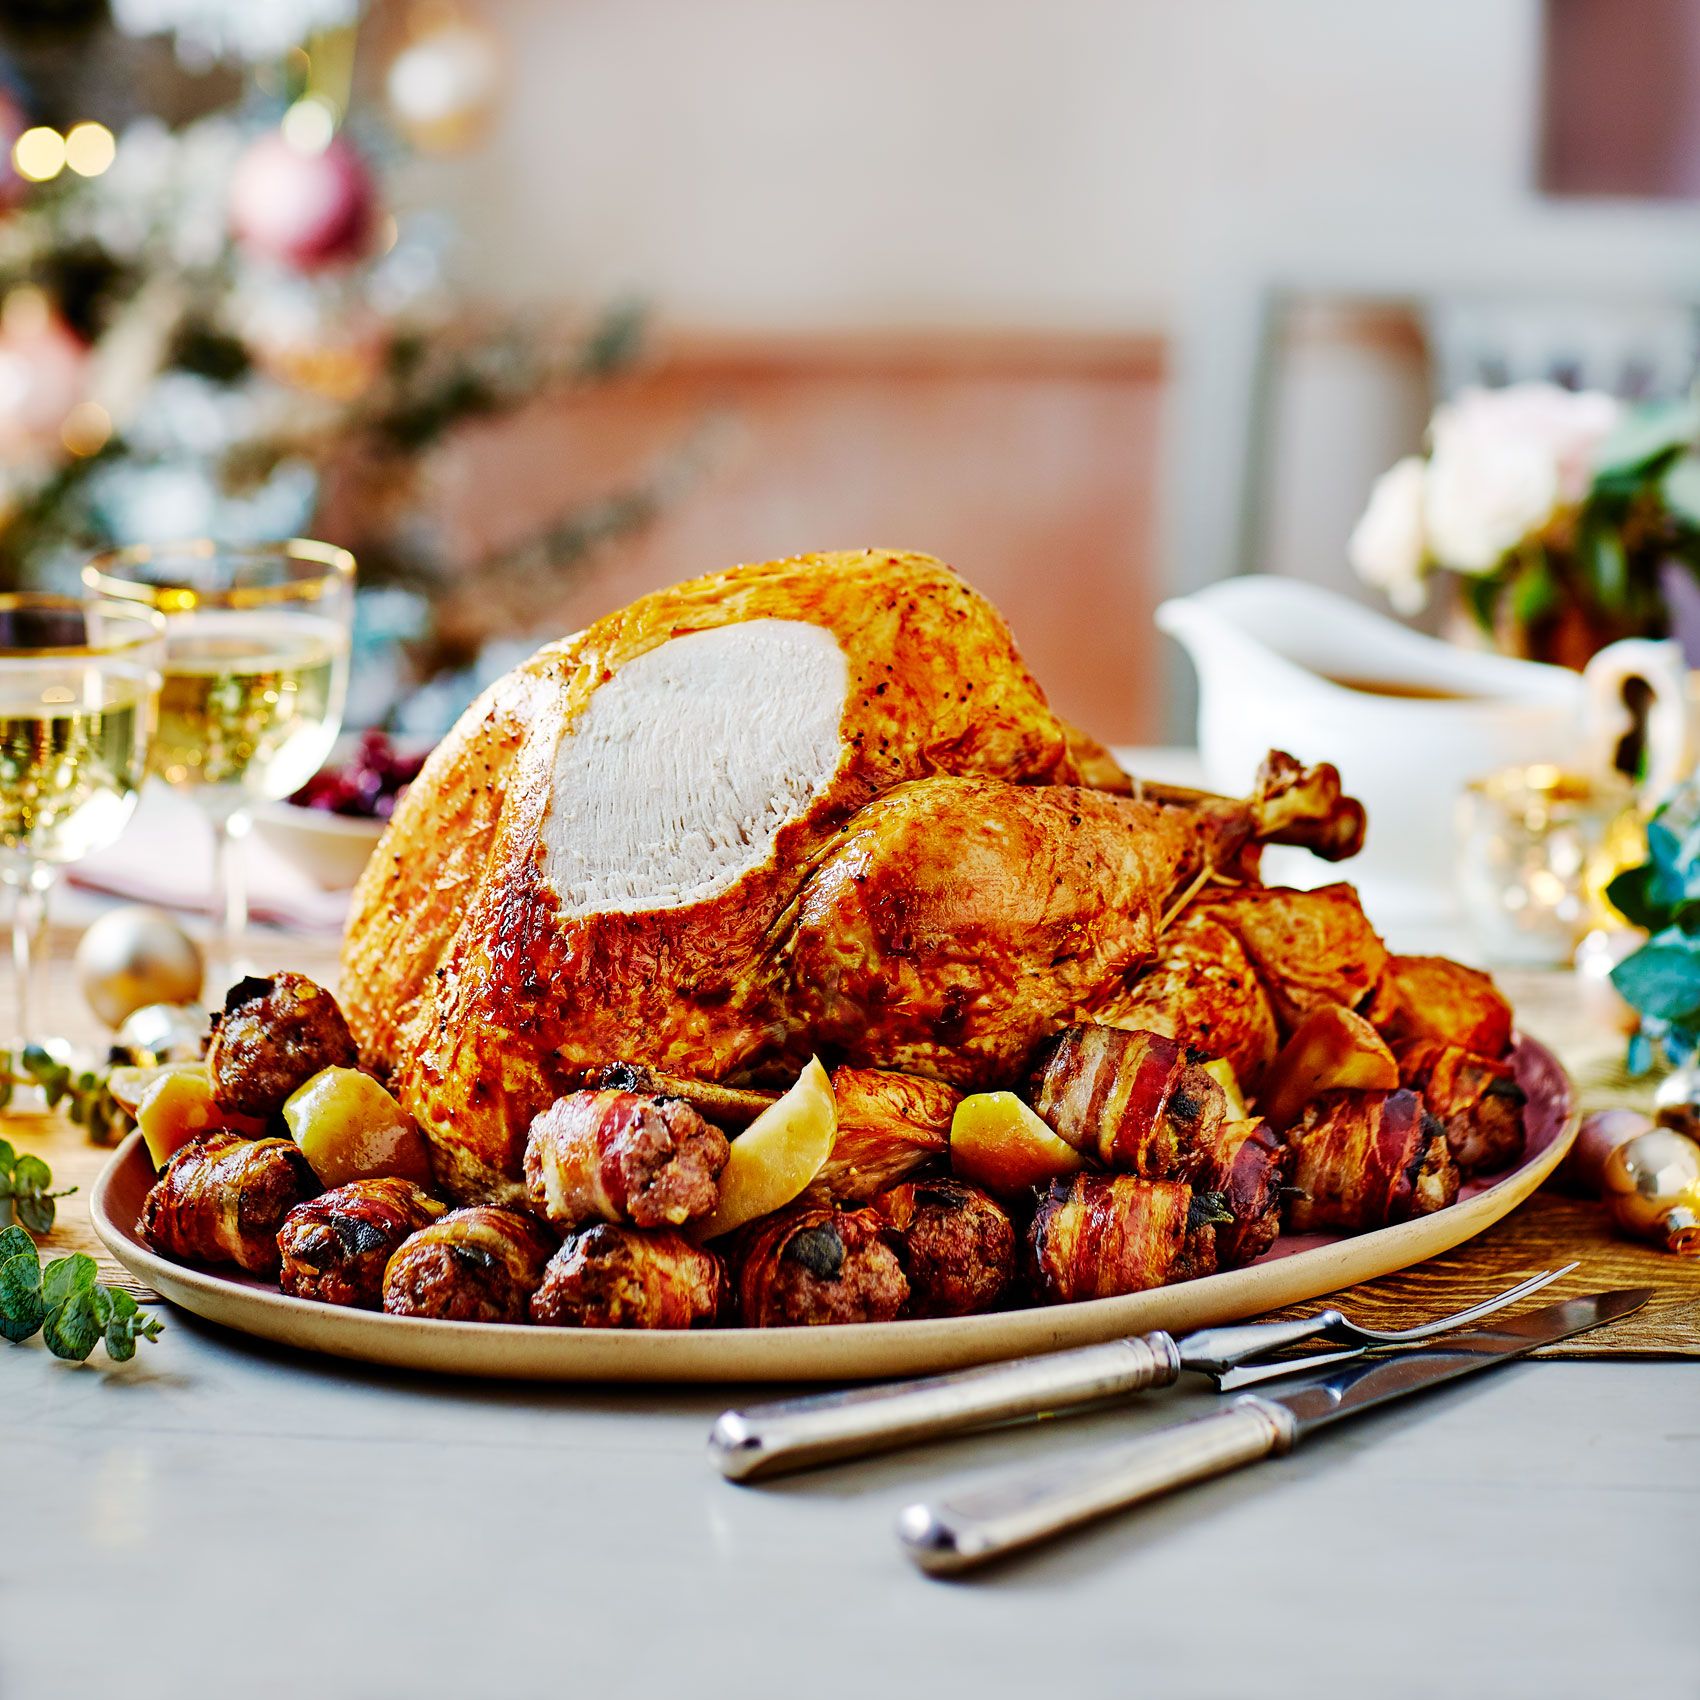 Classic Christmas roast turkey